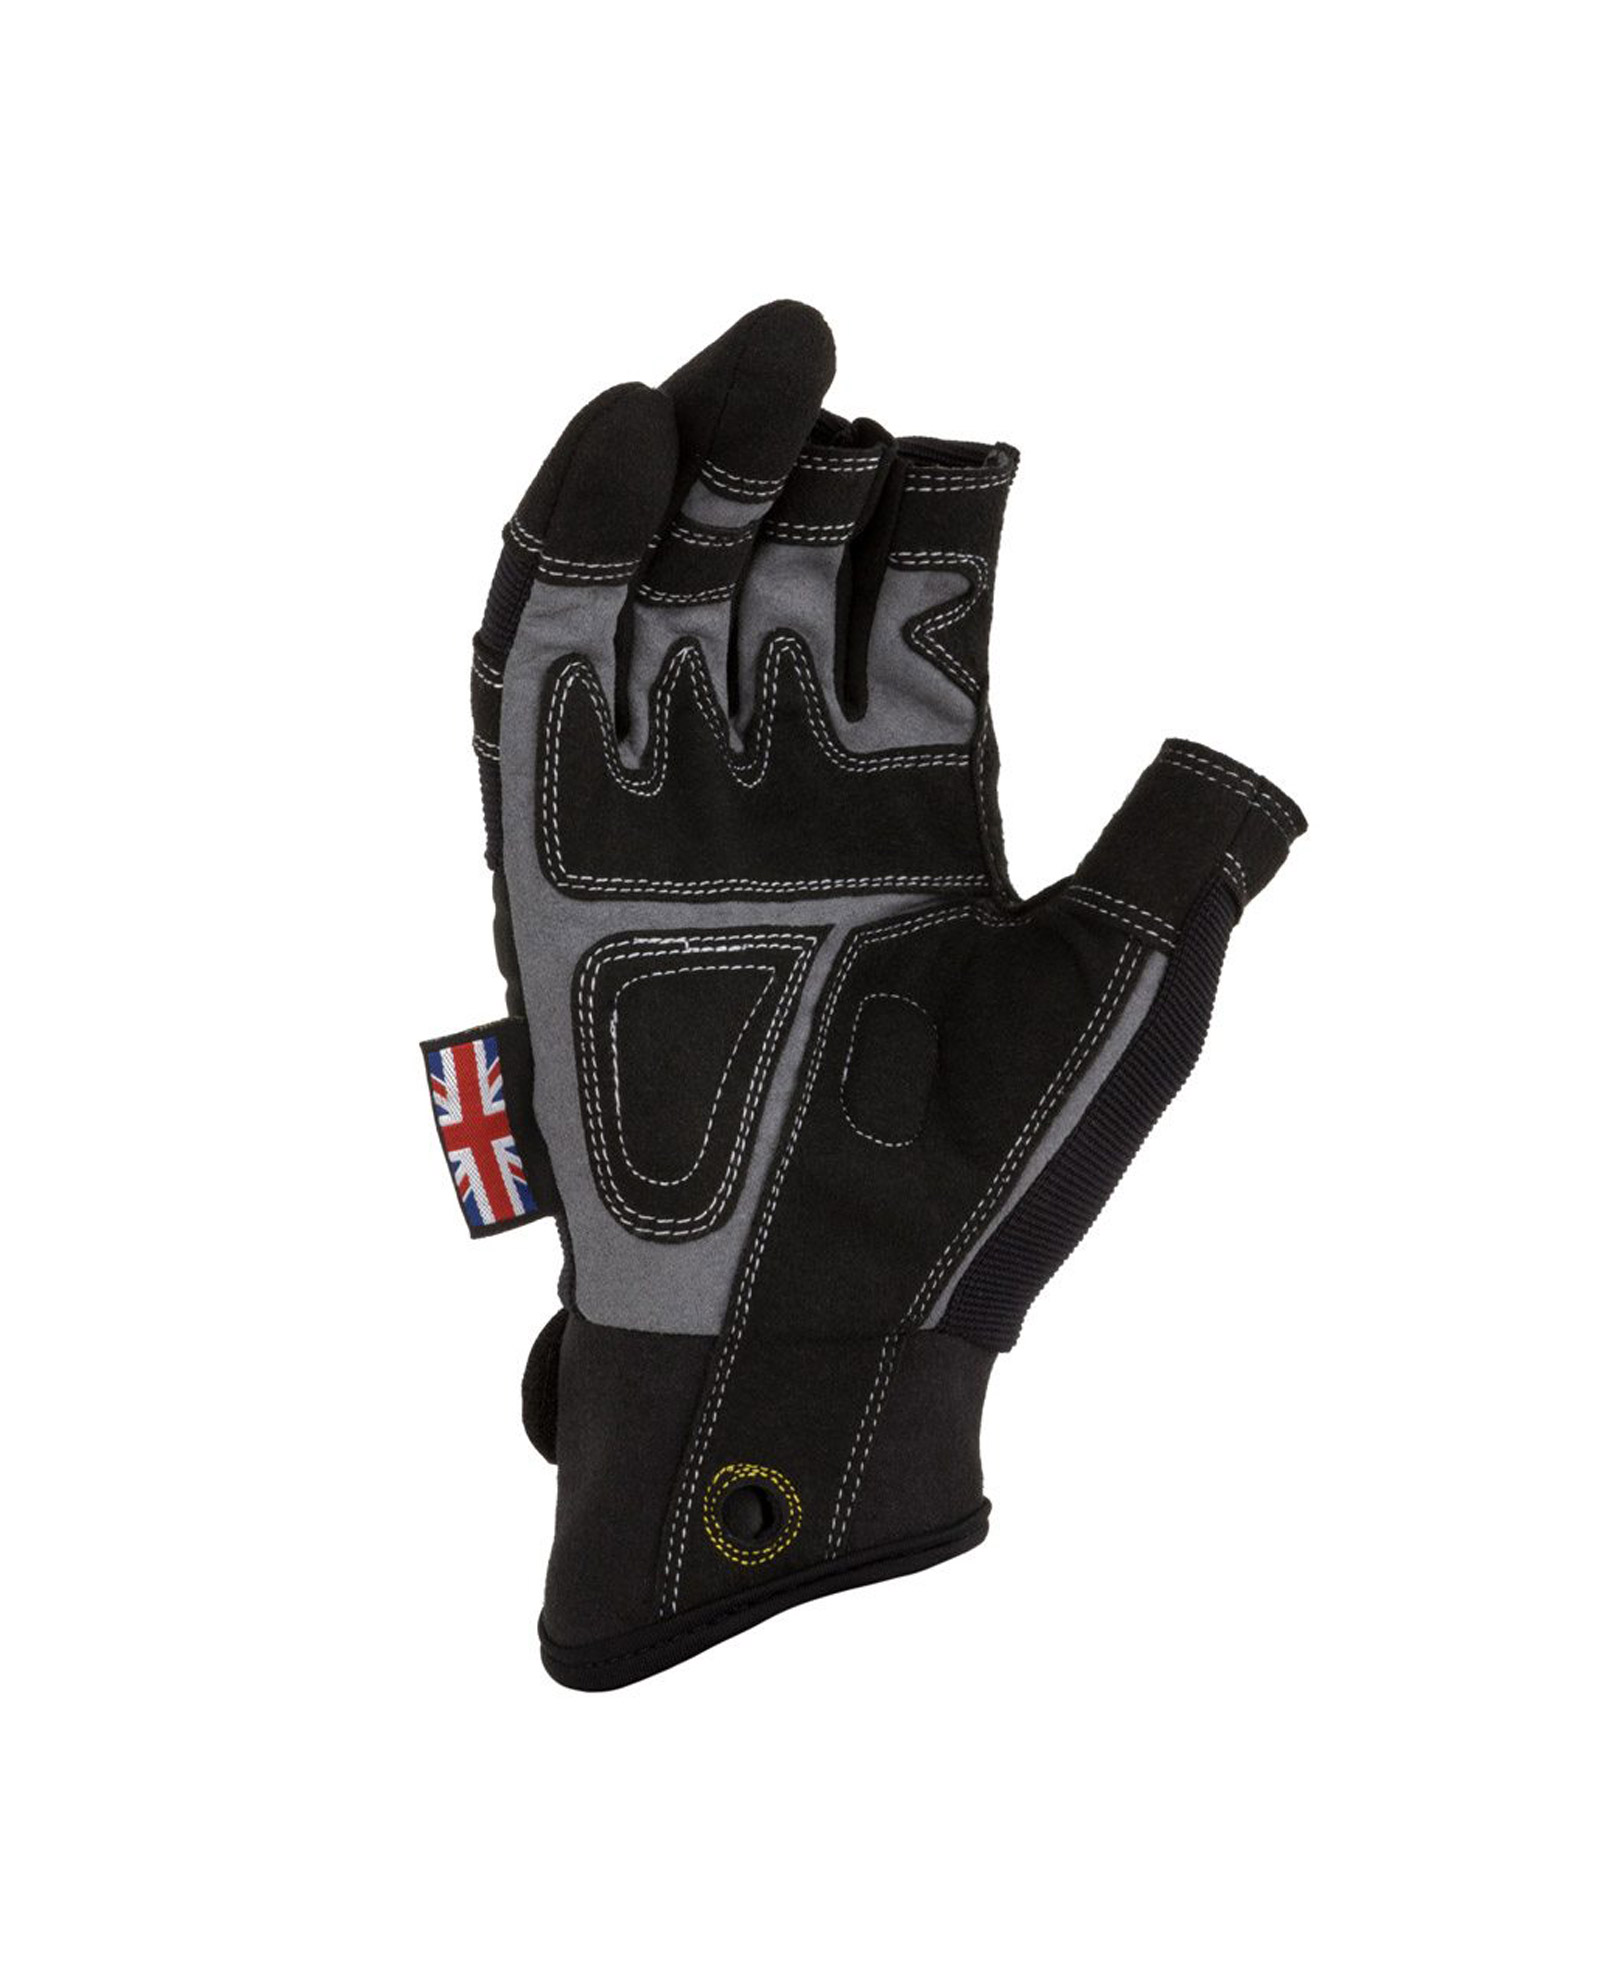 Dirty Rigger Glove Dty Comffrm Comfort Fit Framer Rigger Glove 1